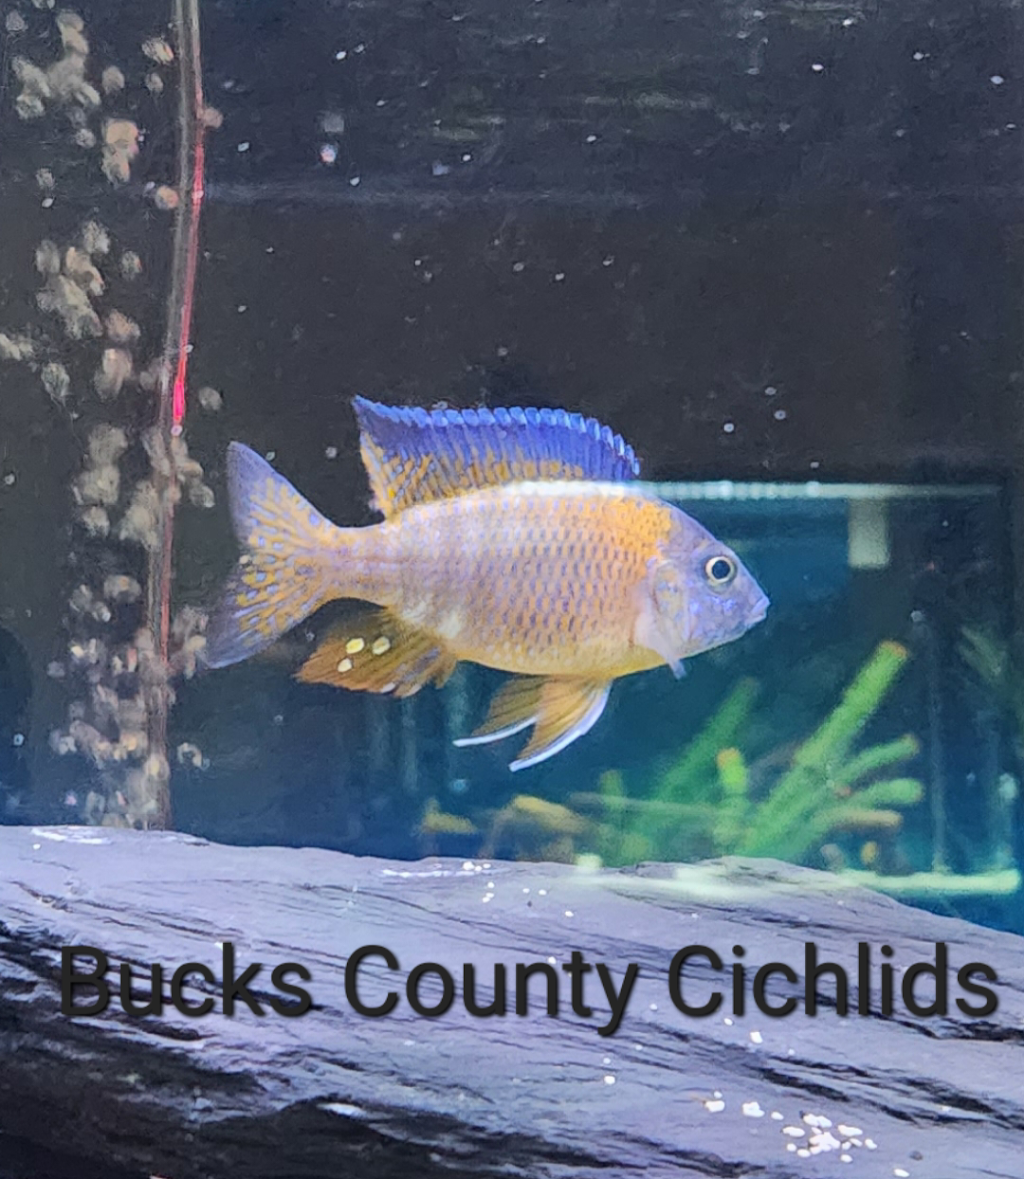 Bucks County Cichlids | Wismer Rd, Doylestown, PA 18902 | Phone: (267) 885-6653